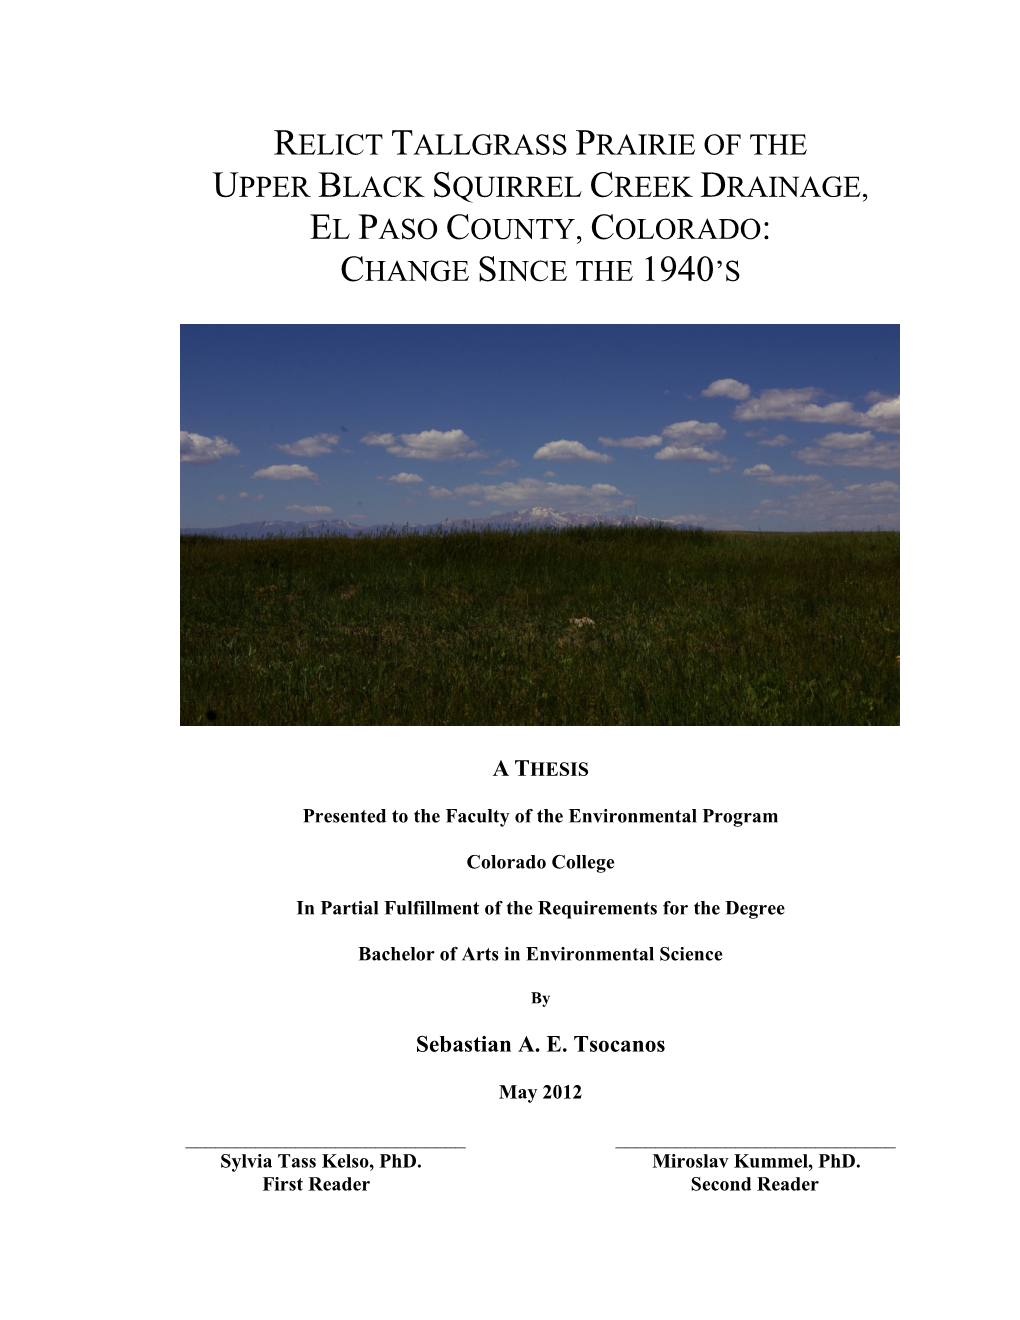 Relict Tallgrass Prairie of the Upper Black Squirrel Creek Drainage, El Paso County, Colorado: Change Since the 1940’S